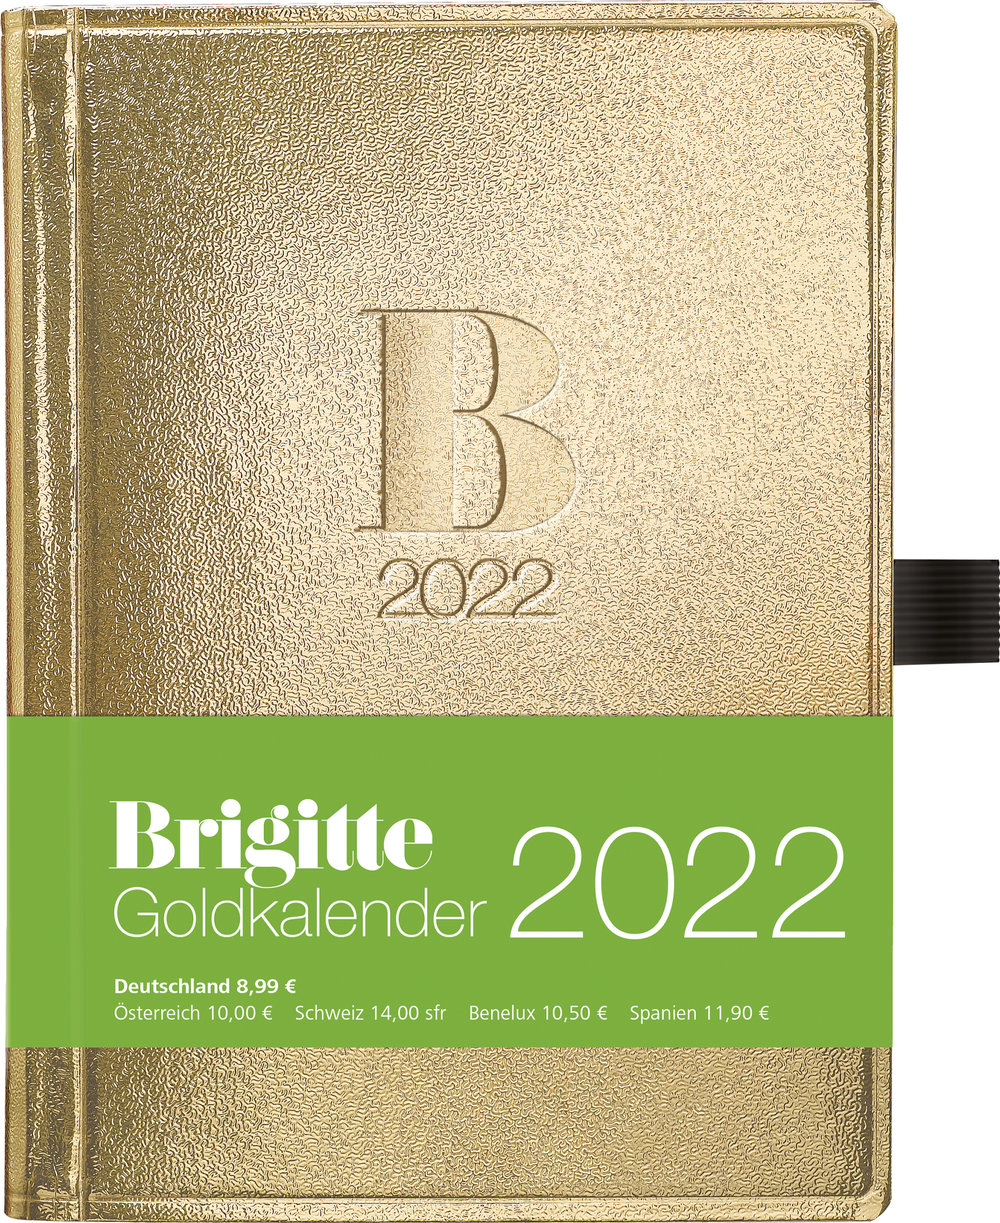 BRIGITTE Goldkalender 2022